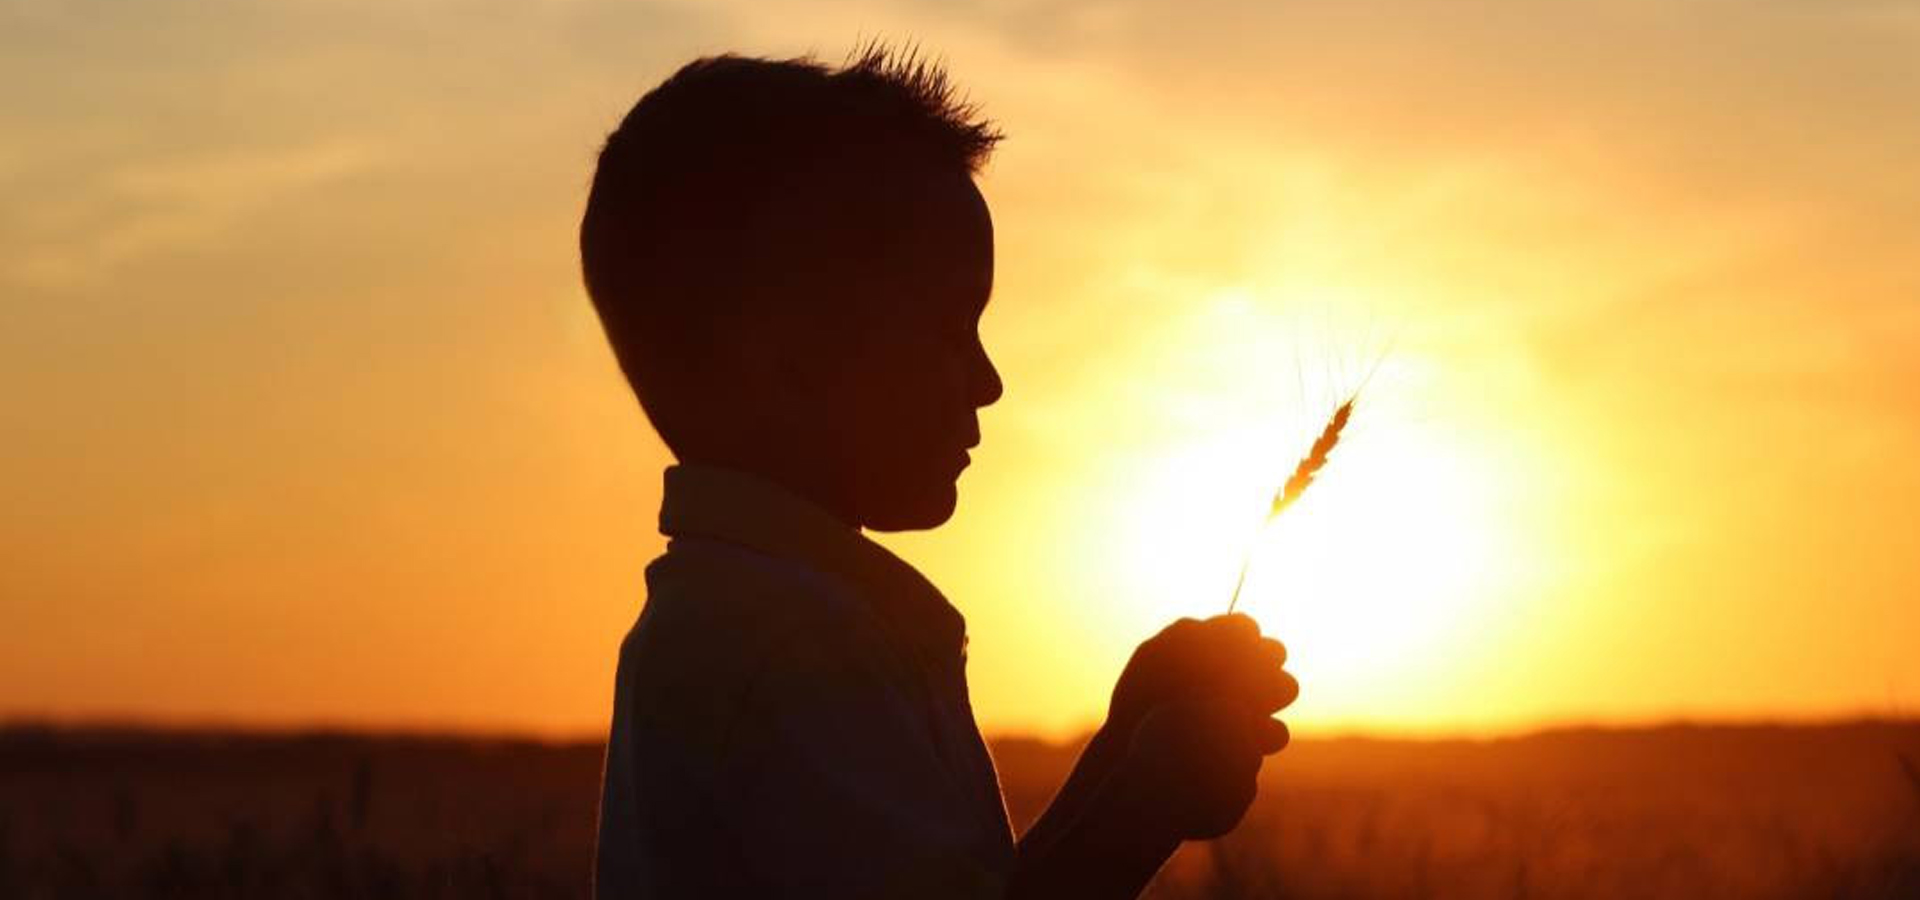 Child holding wheat